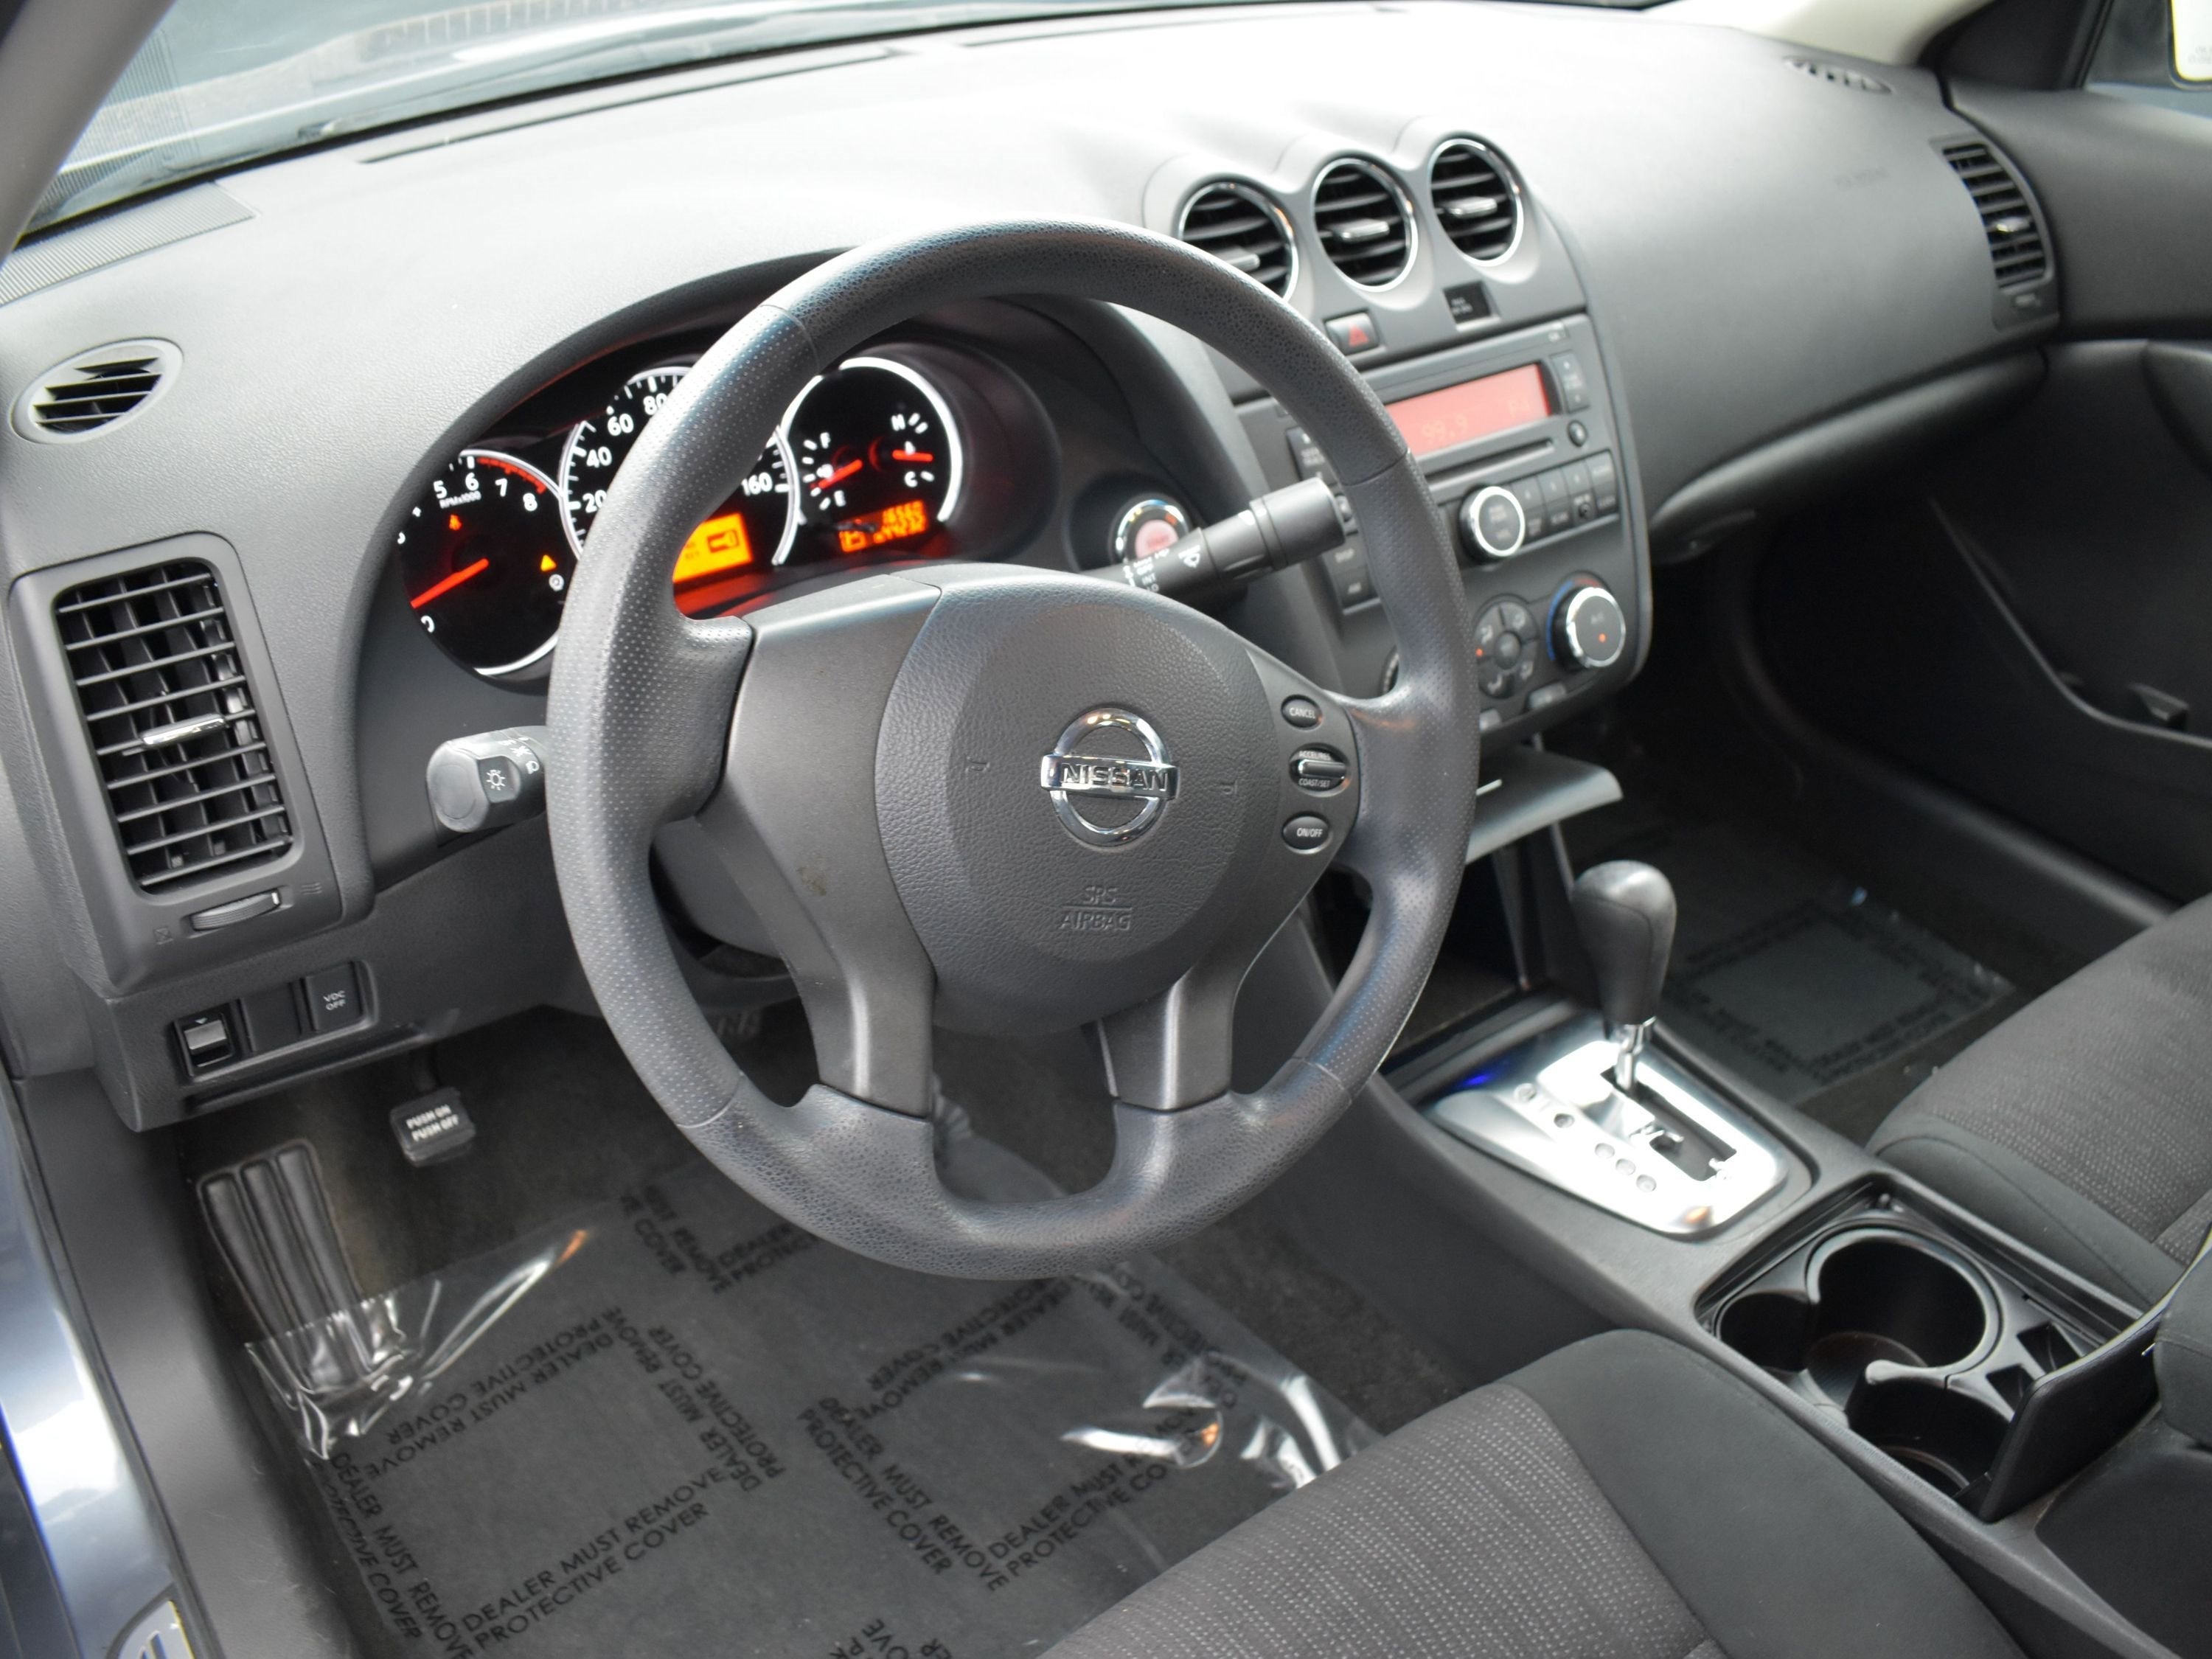 2010 Nissan Altima 4dr Sdn I4 CVT 2.5 S